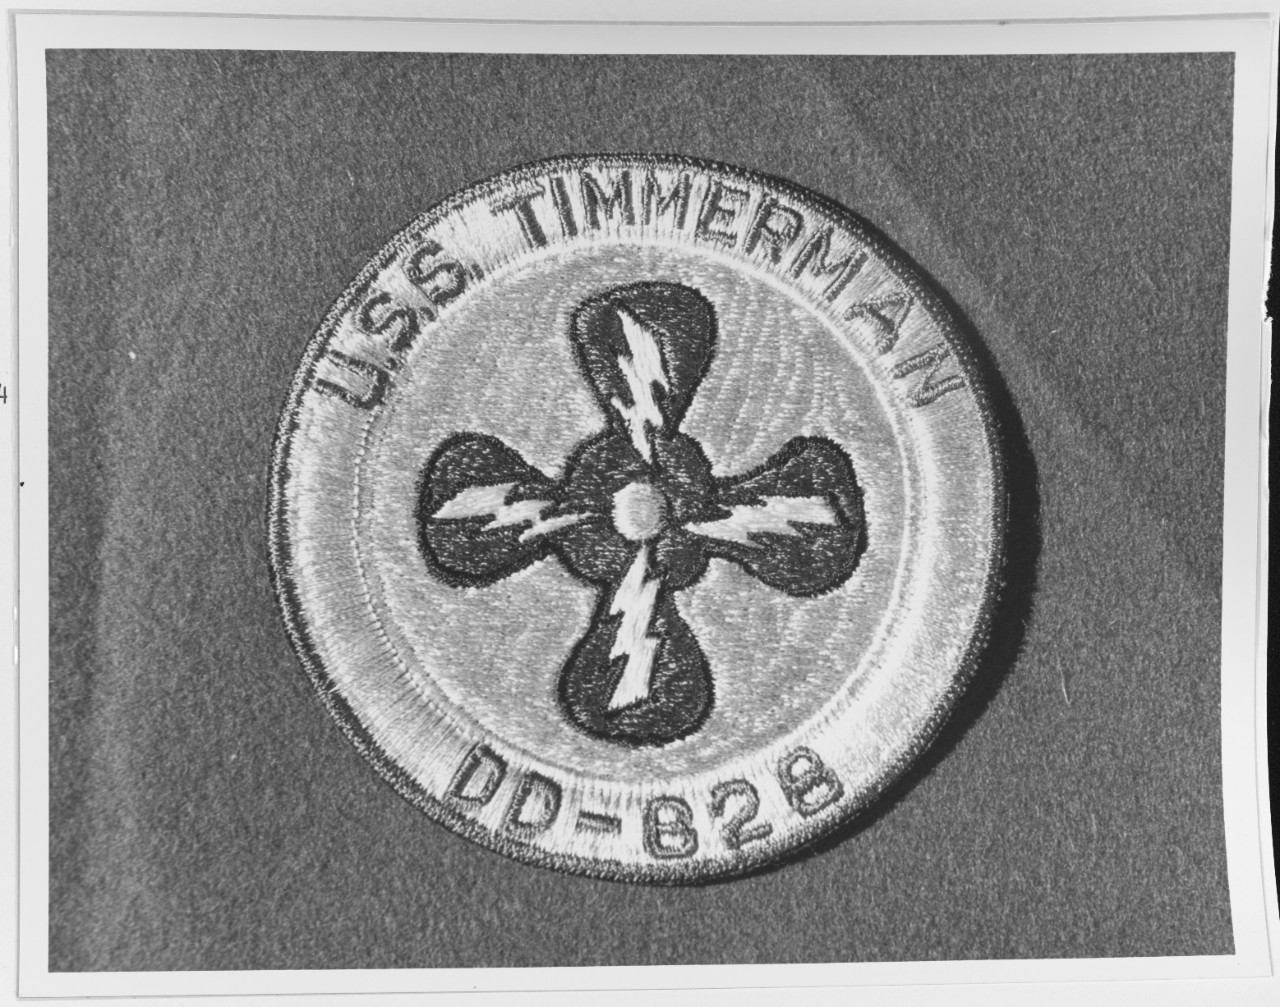 Insignia:  USS TIMMERMAN (DD-828)